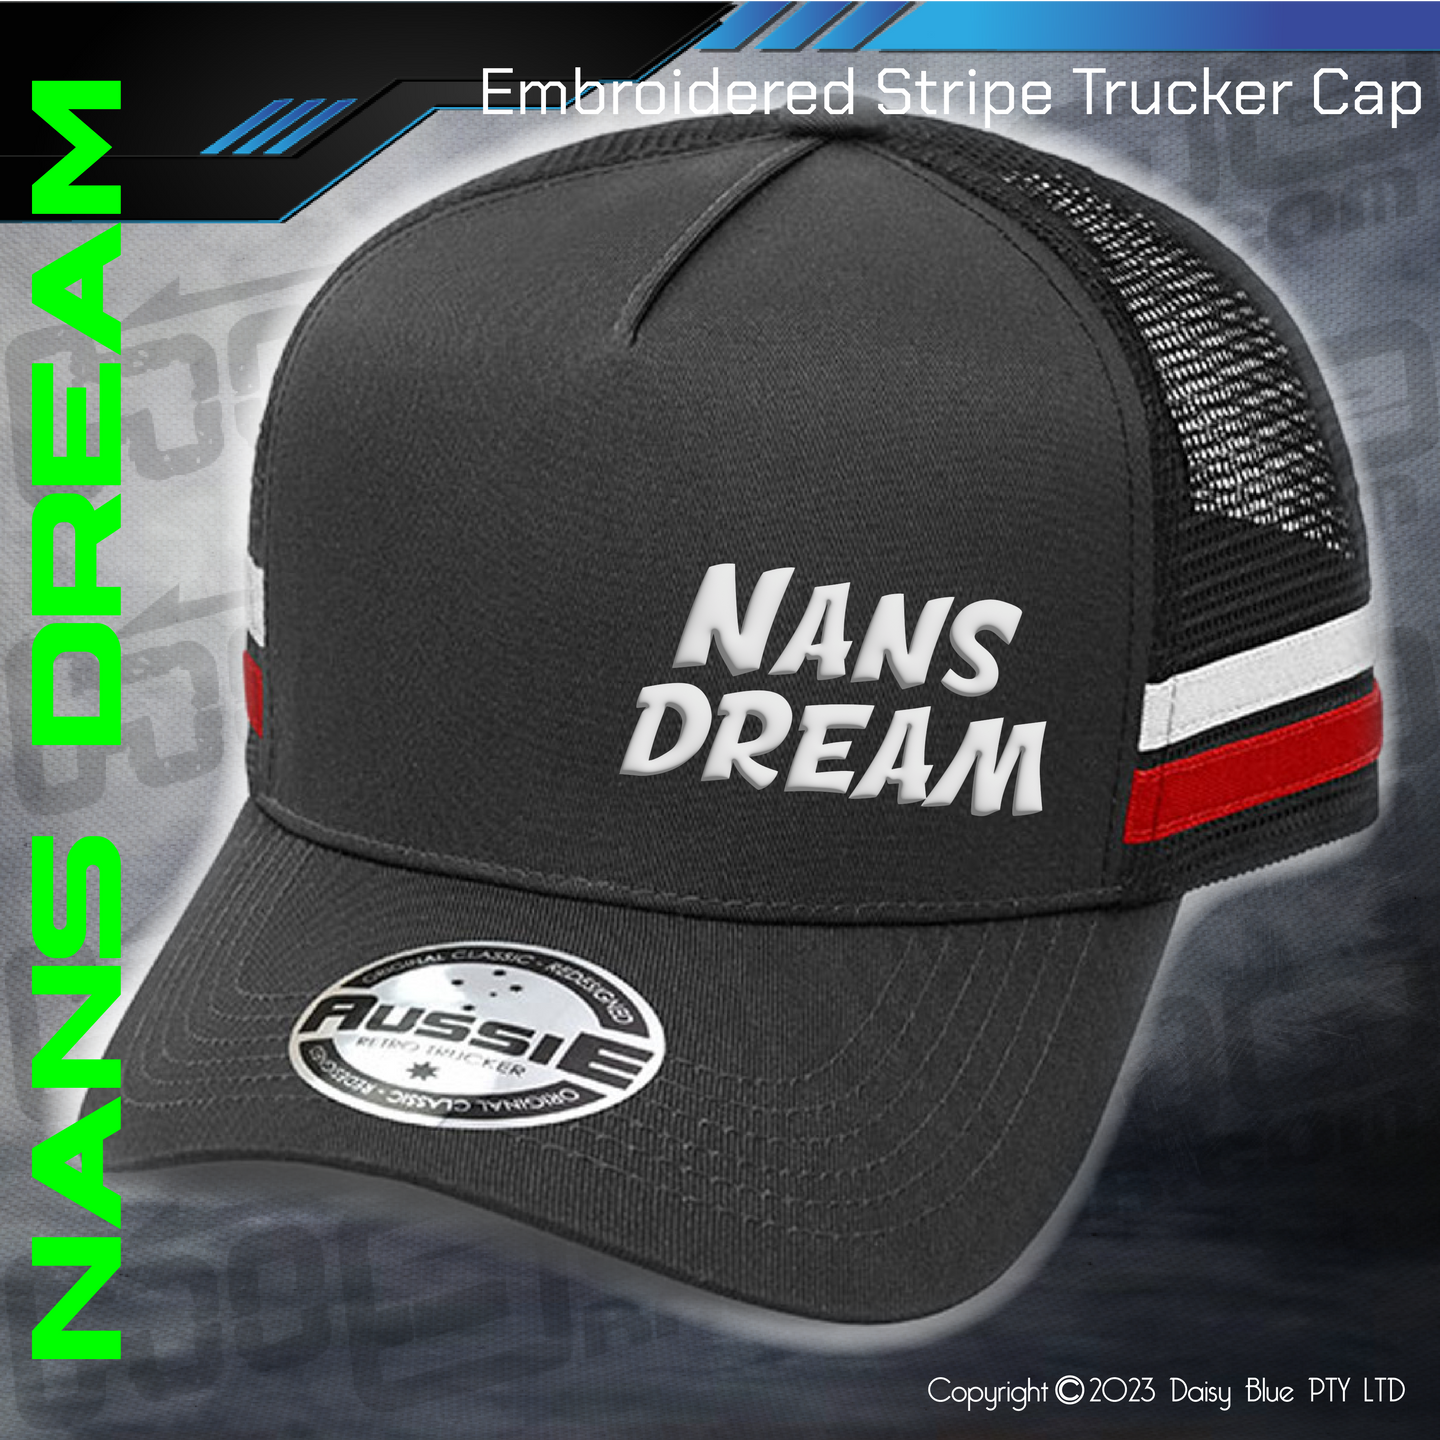 Embroidered STRIPE Trucker Cap - Nans Dream